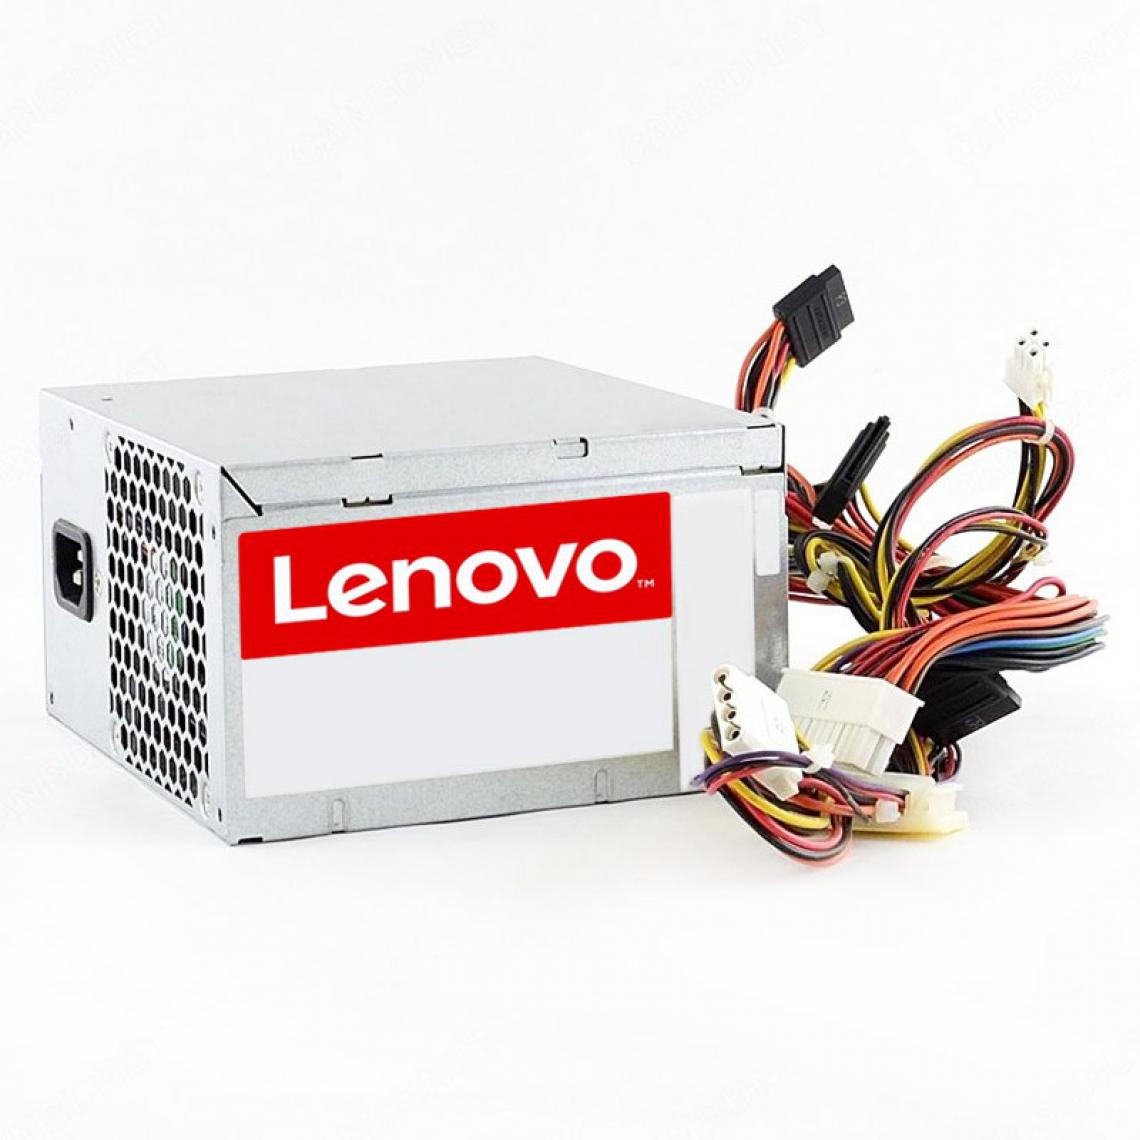 Lenovo - Alimentation ATX Tour Lenovo Thinkcentre M58e (Type 7298) 280W 41A9684 Power Supply - Alimentation modulaire